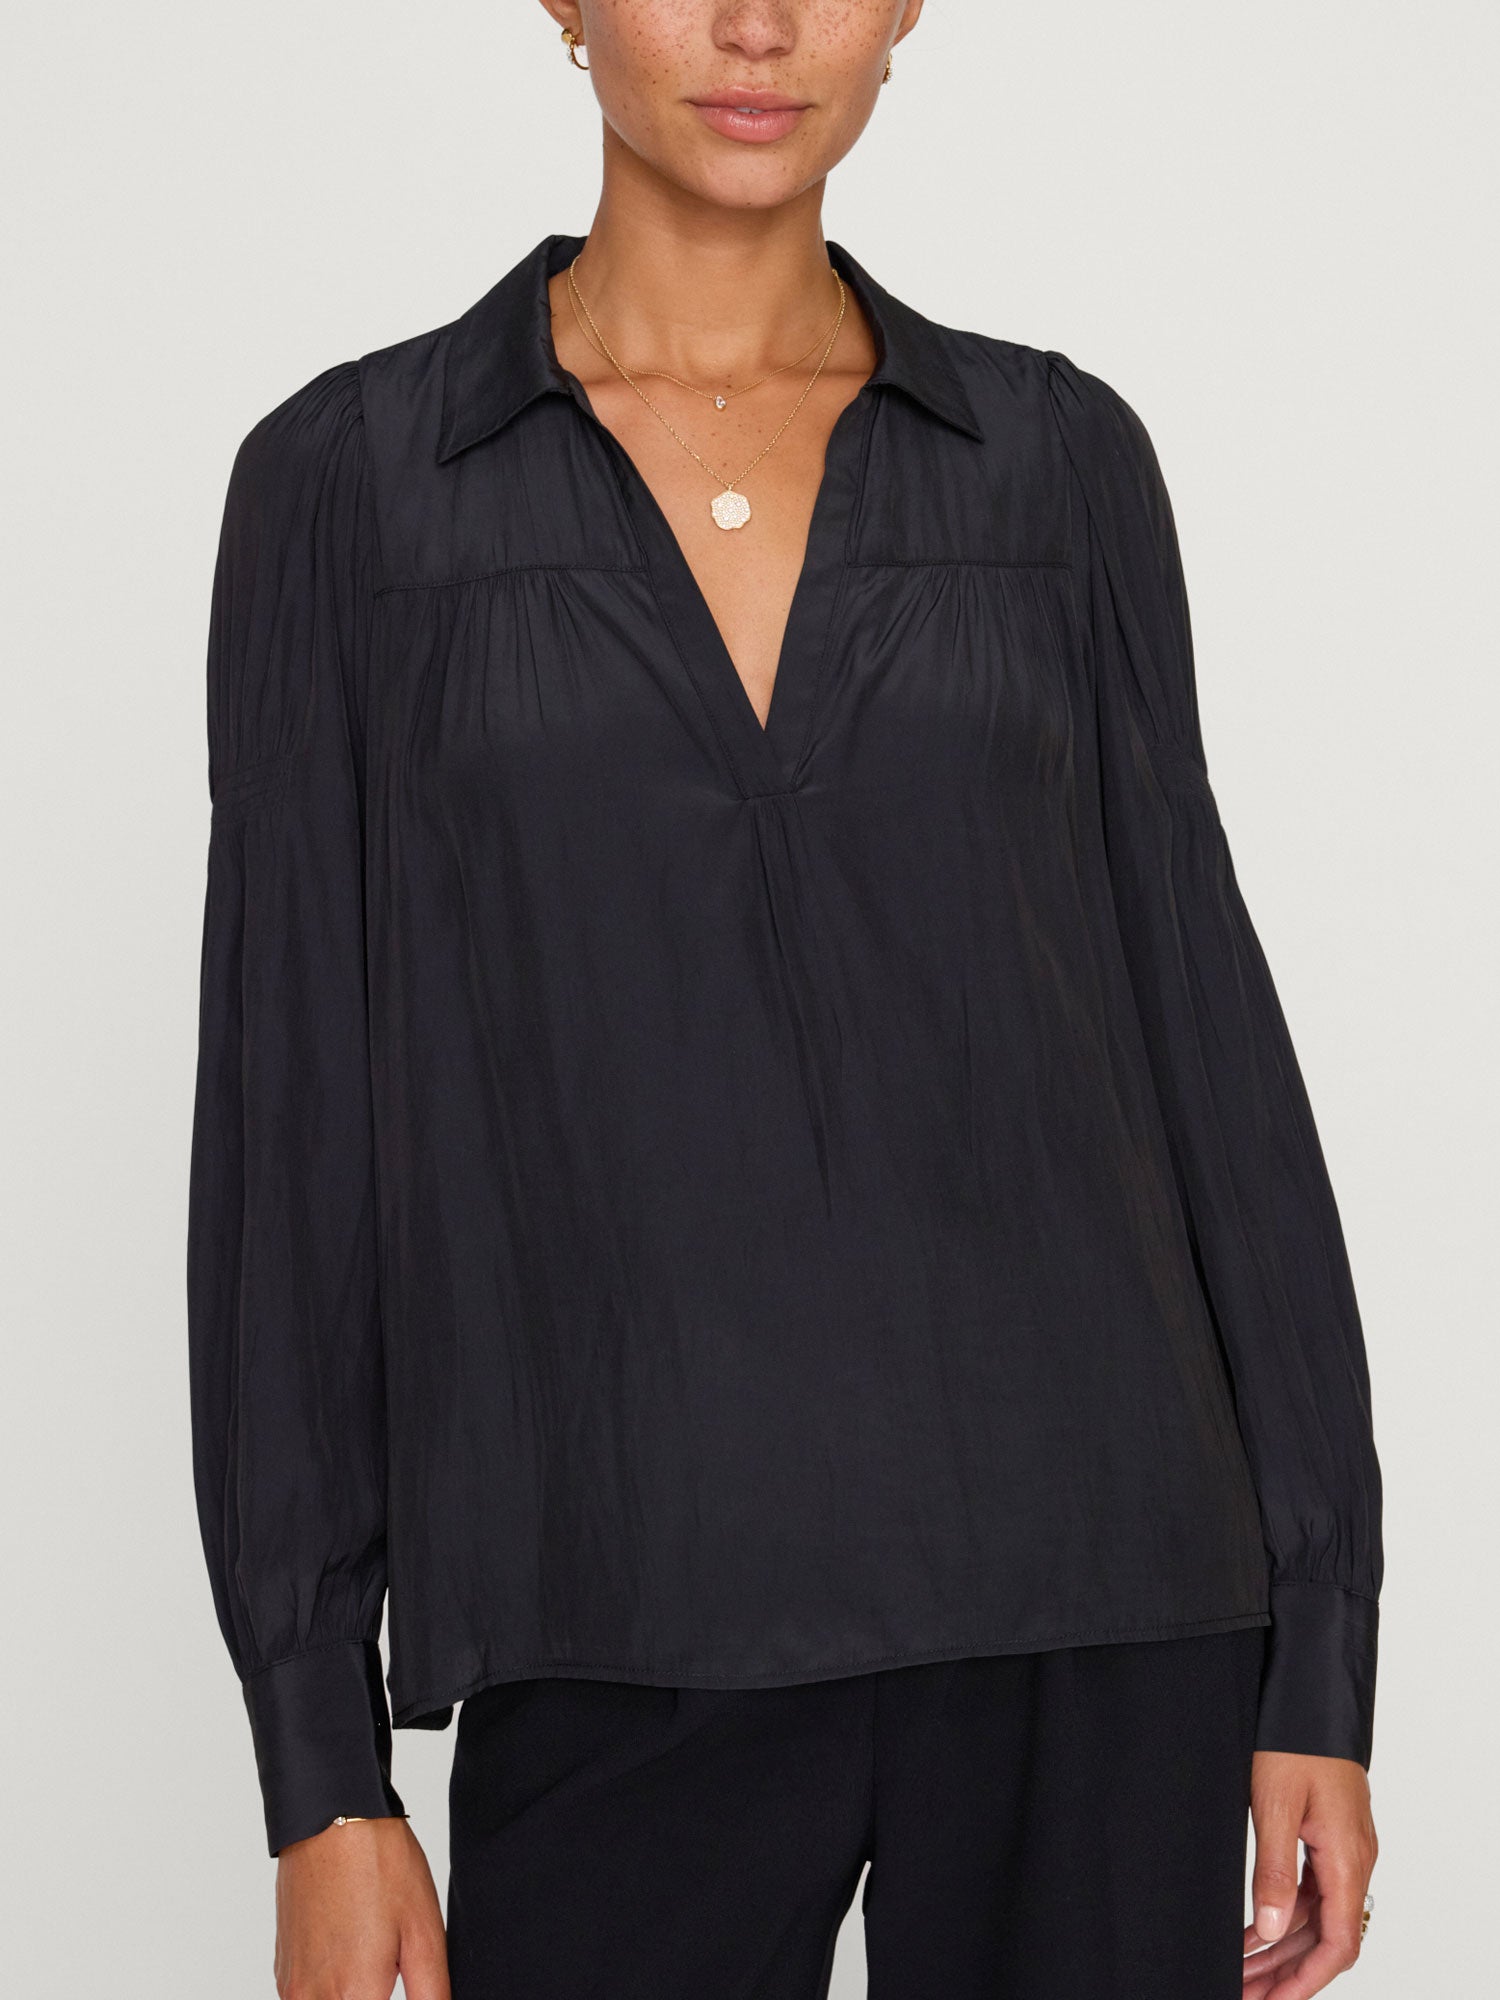 Anson black v-neck blouse front view 2 